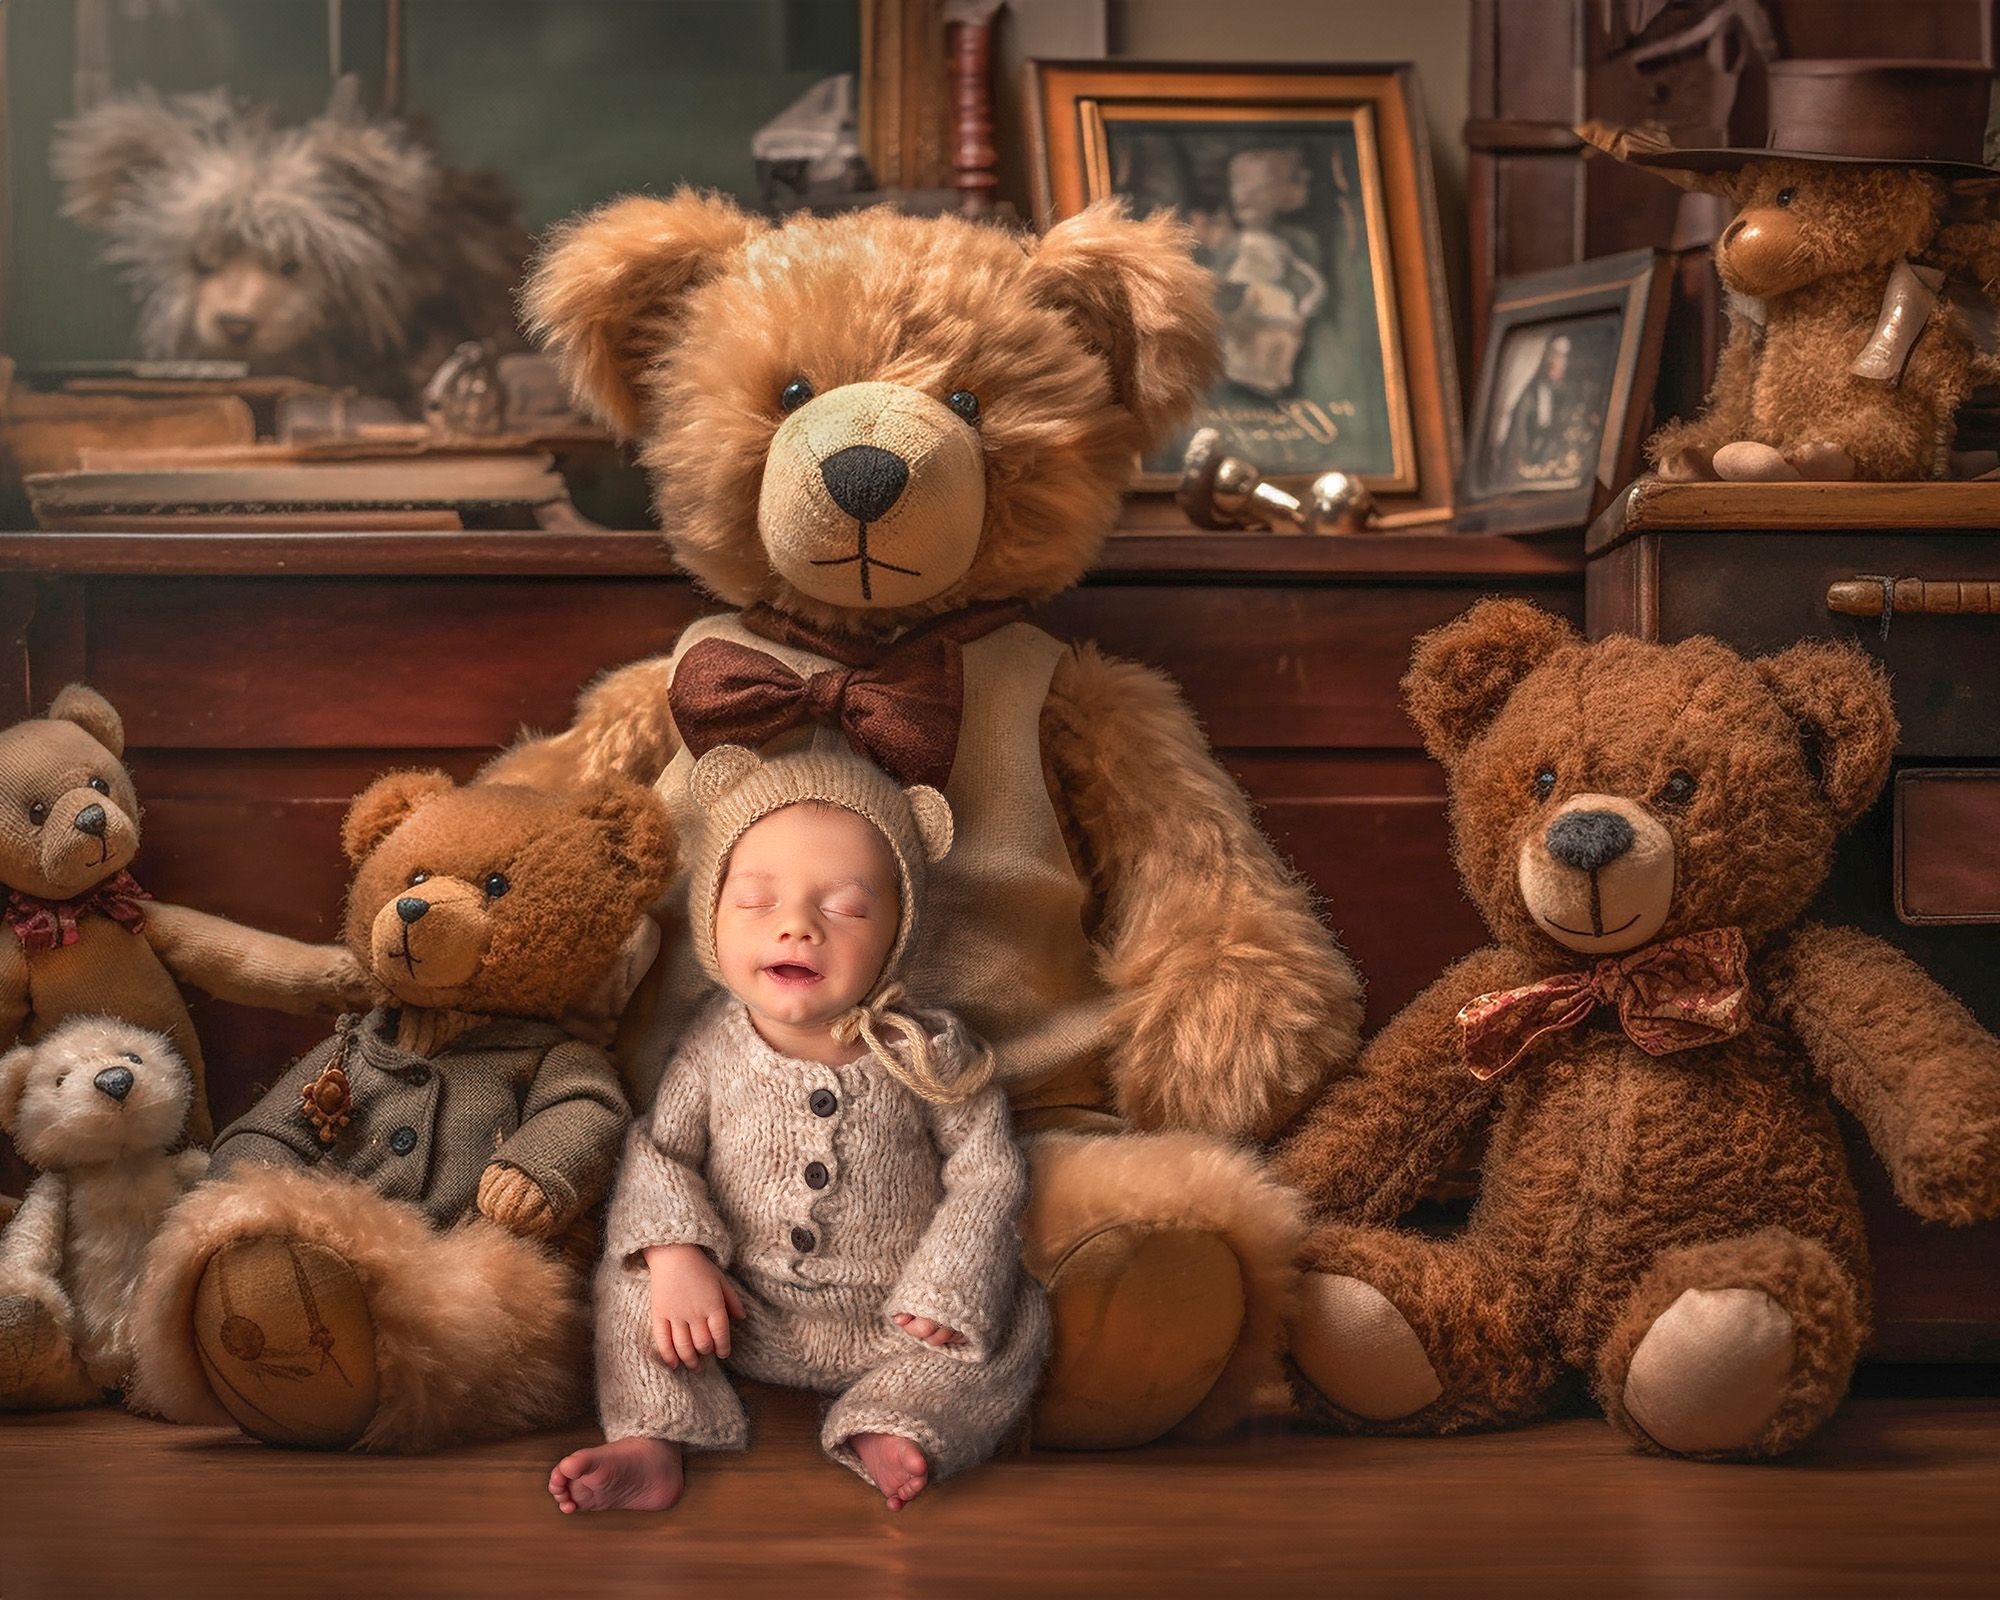 smiling newborn newborn baby boy sitting surrounded by teddy bears